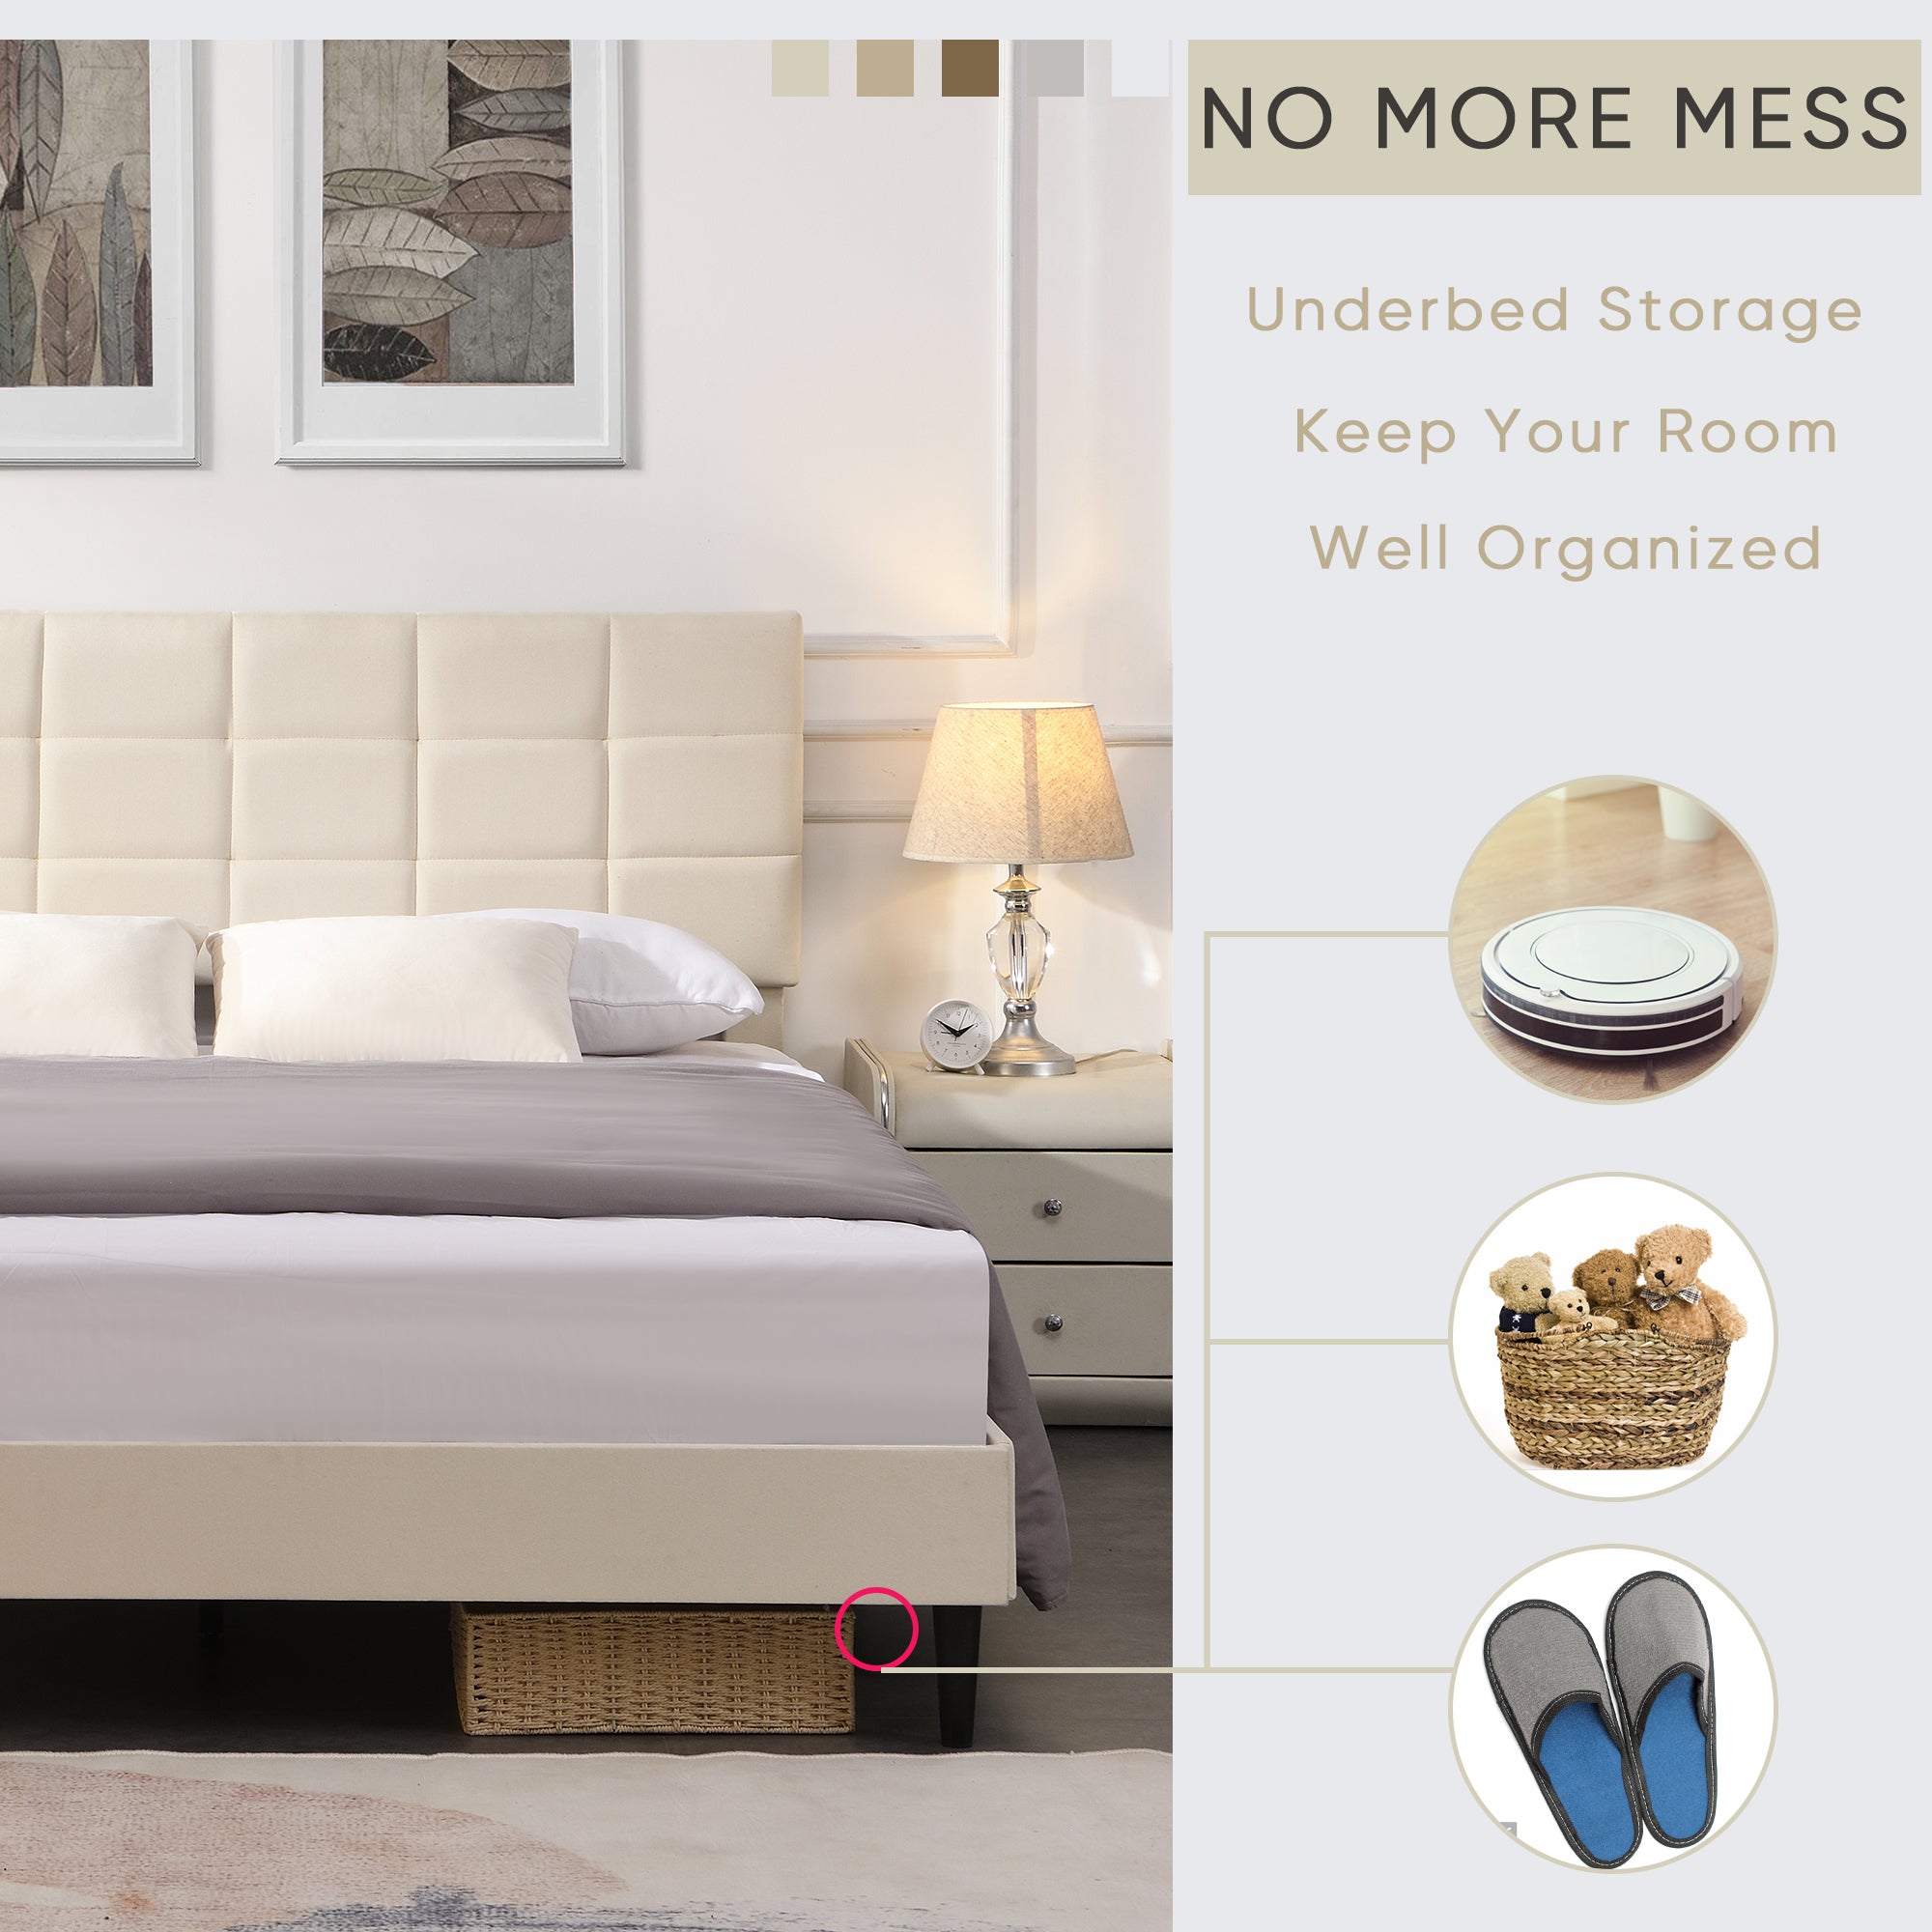 Full Size Platform Bed Frame with Fabric Upholstered beige-metal & wood